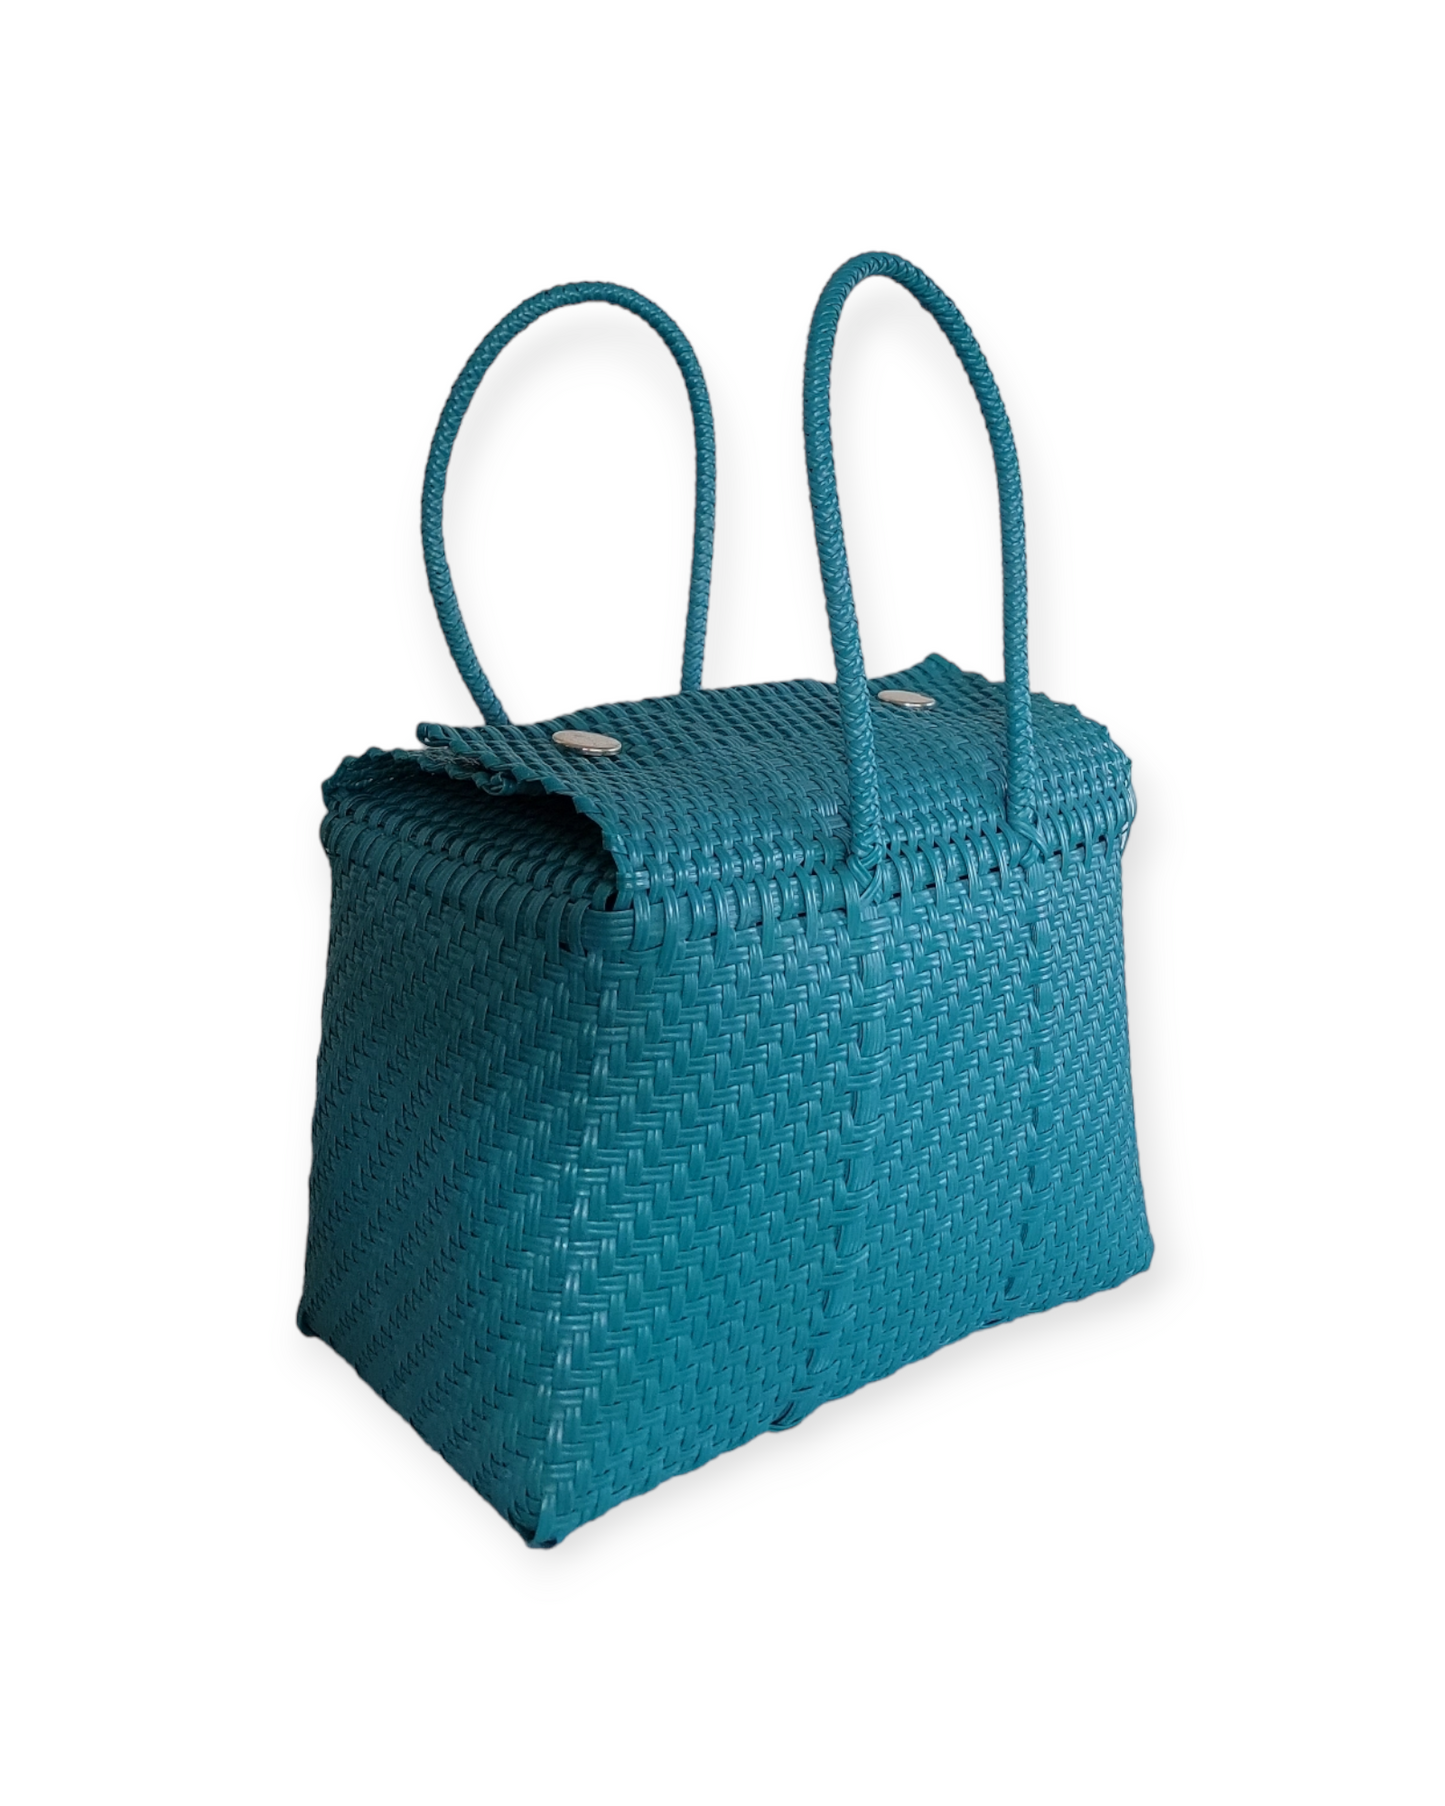 Be Praia | Turquesa Large Basket | Eco-Friendly Handwoven Bag